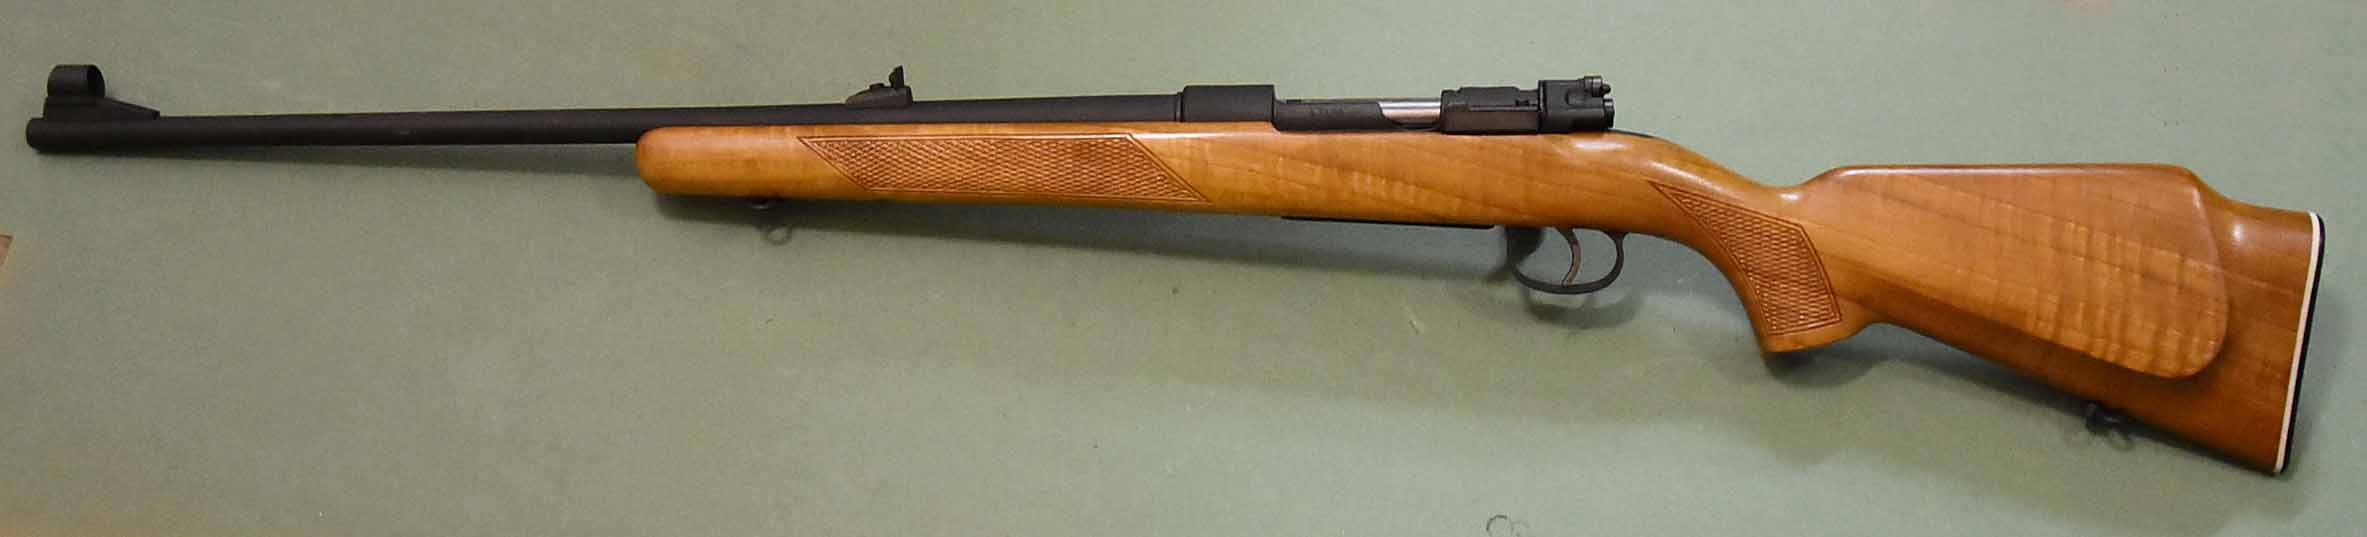 ./guns/rifle/bilder/Rifle-Kongsberg-Mauser-M83-Gave-0011-2.JPG